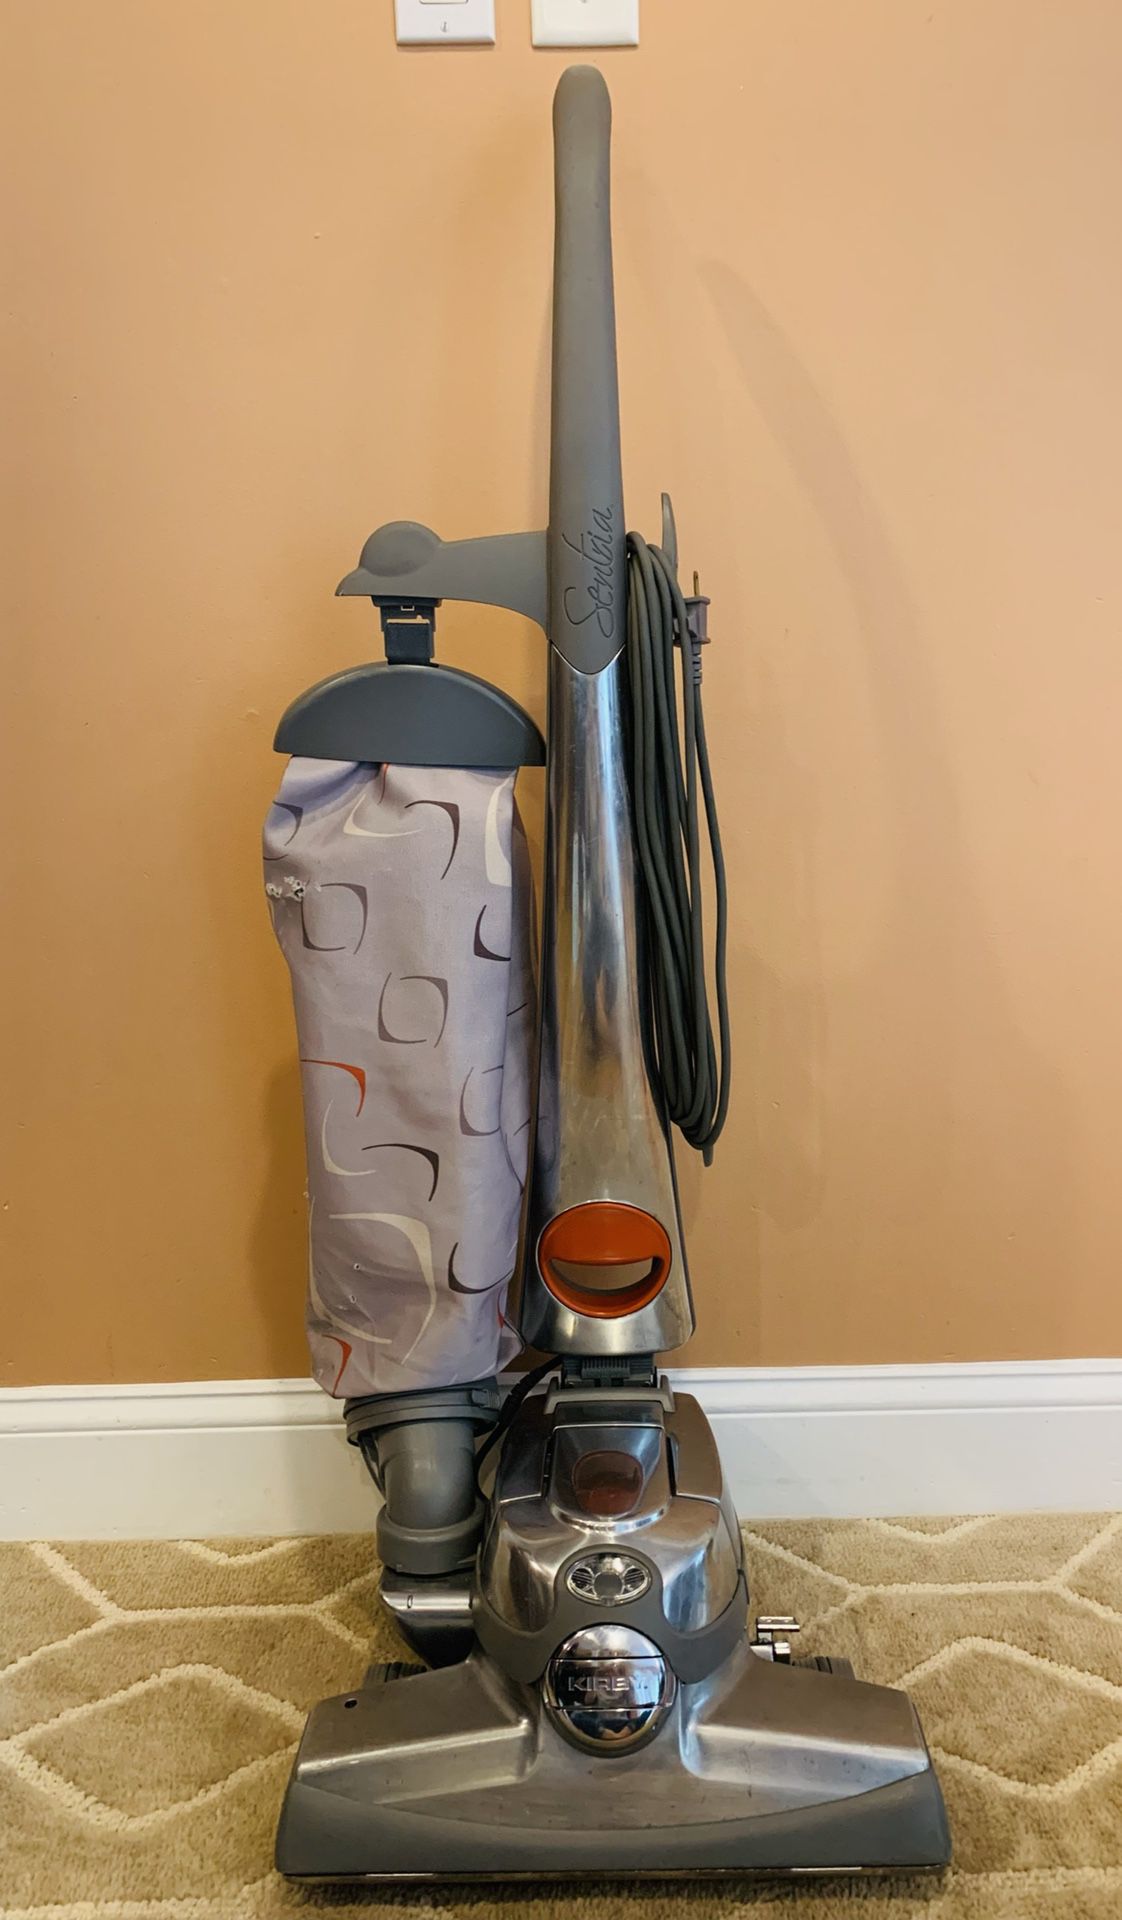 Kirby Sentria vacuum cleaner